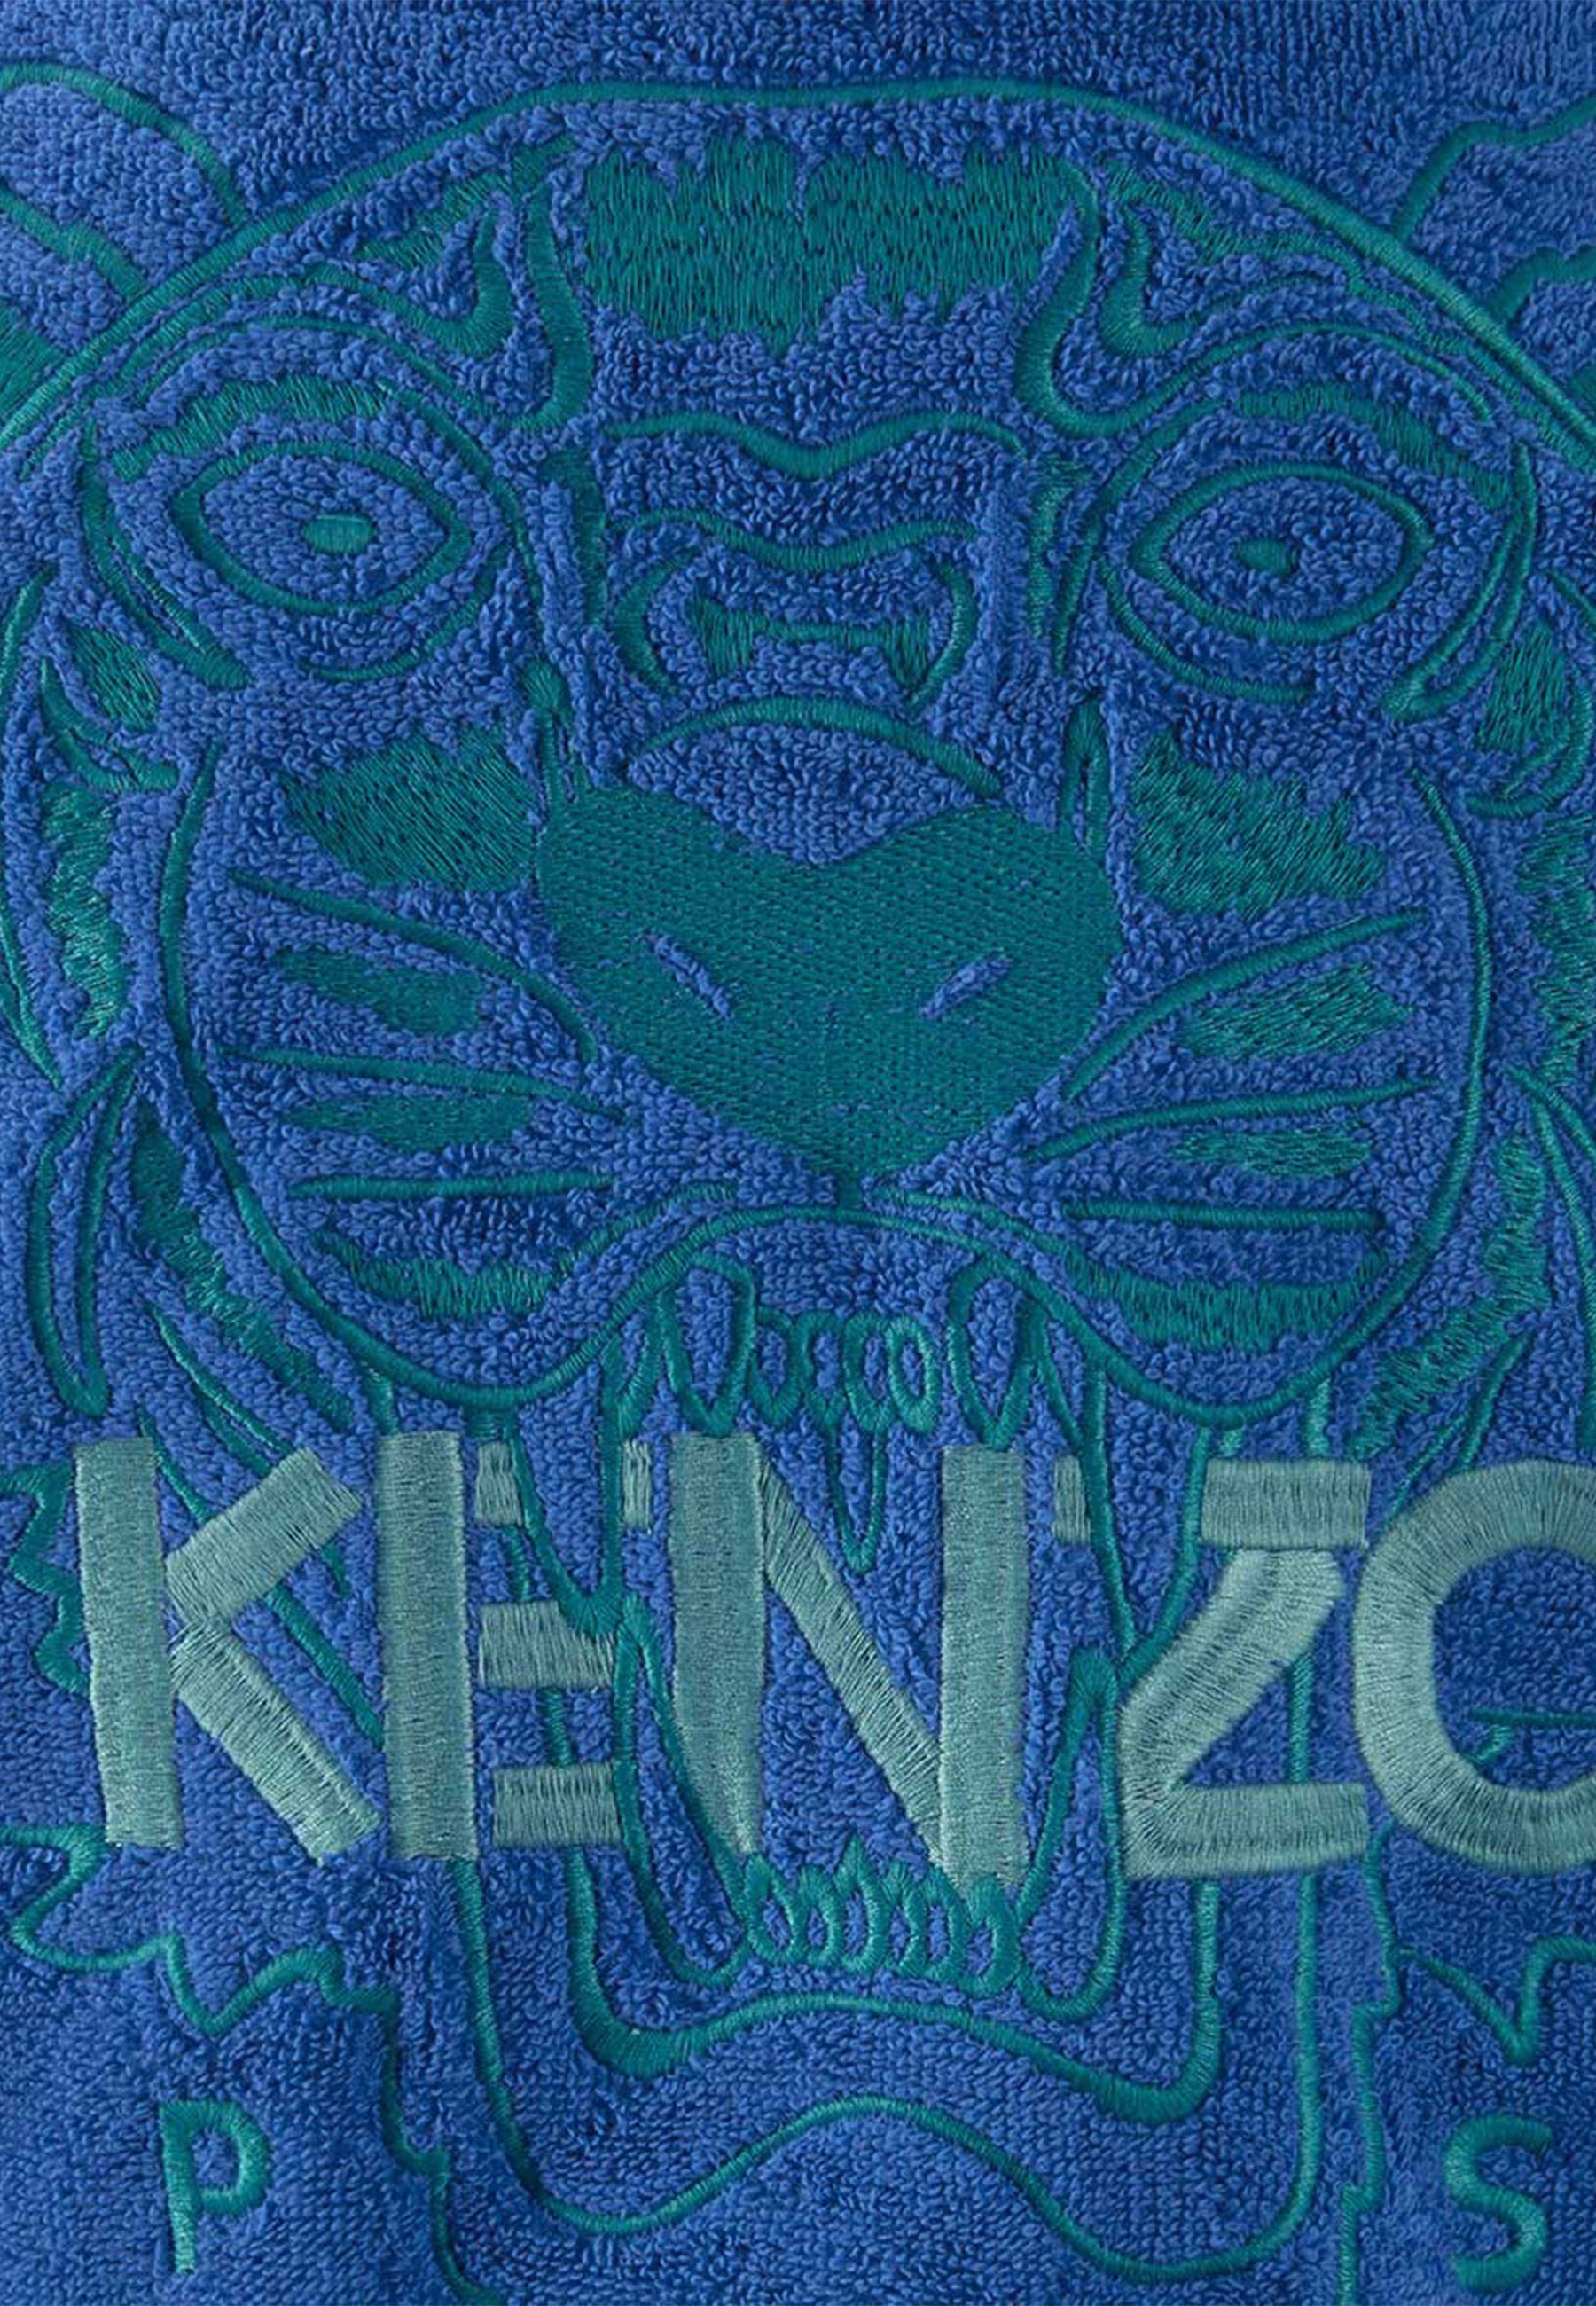 KENZO MAISON 100.0% K ICONIC, Baumwolle, Bademantel modernem Design mit